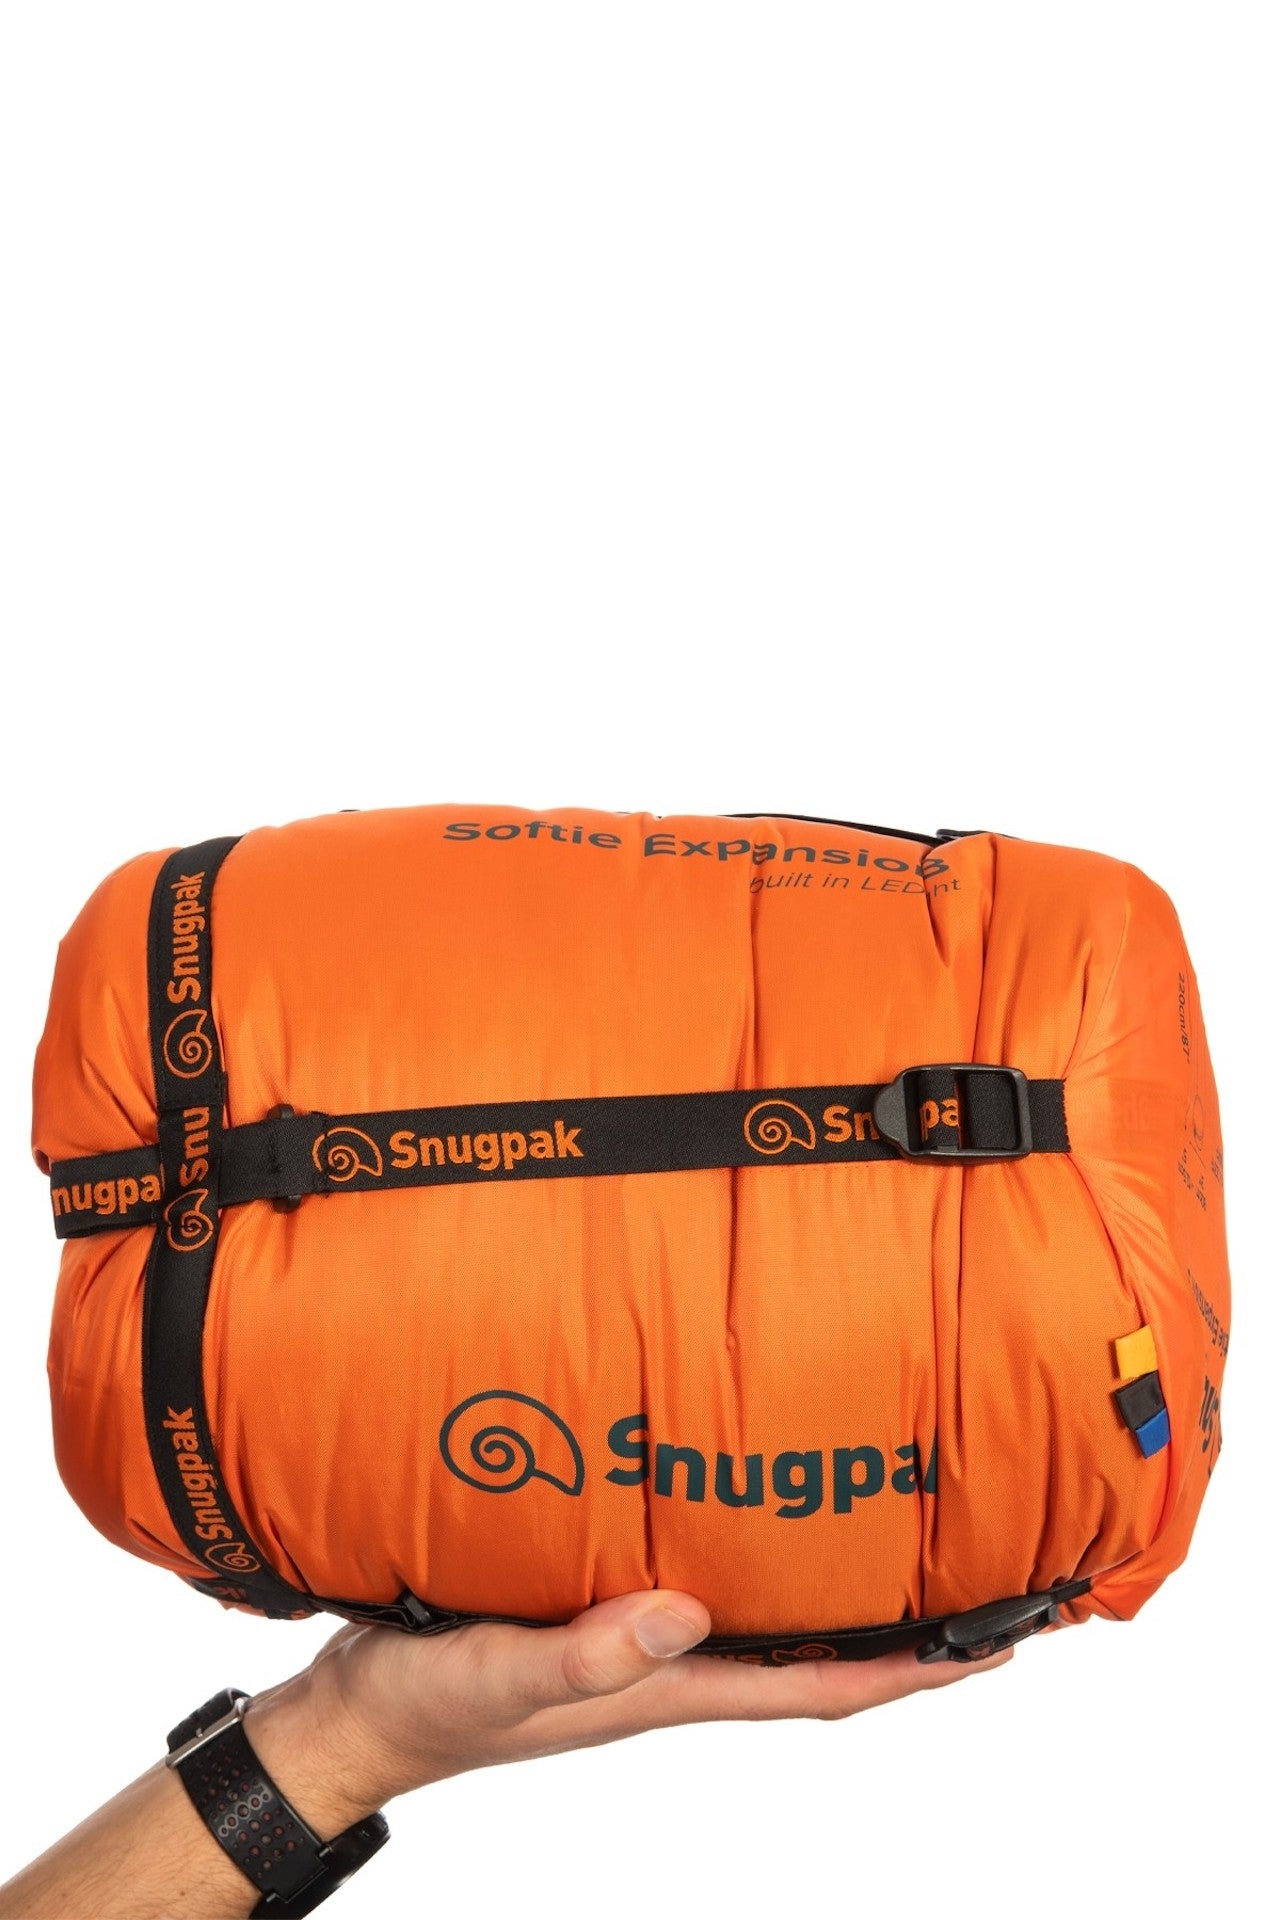 Snugpak Softie Expansion 3 Sleeping Bag (Azure/ Black)